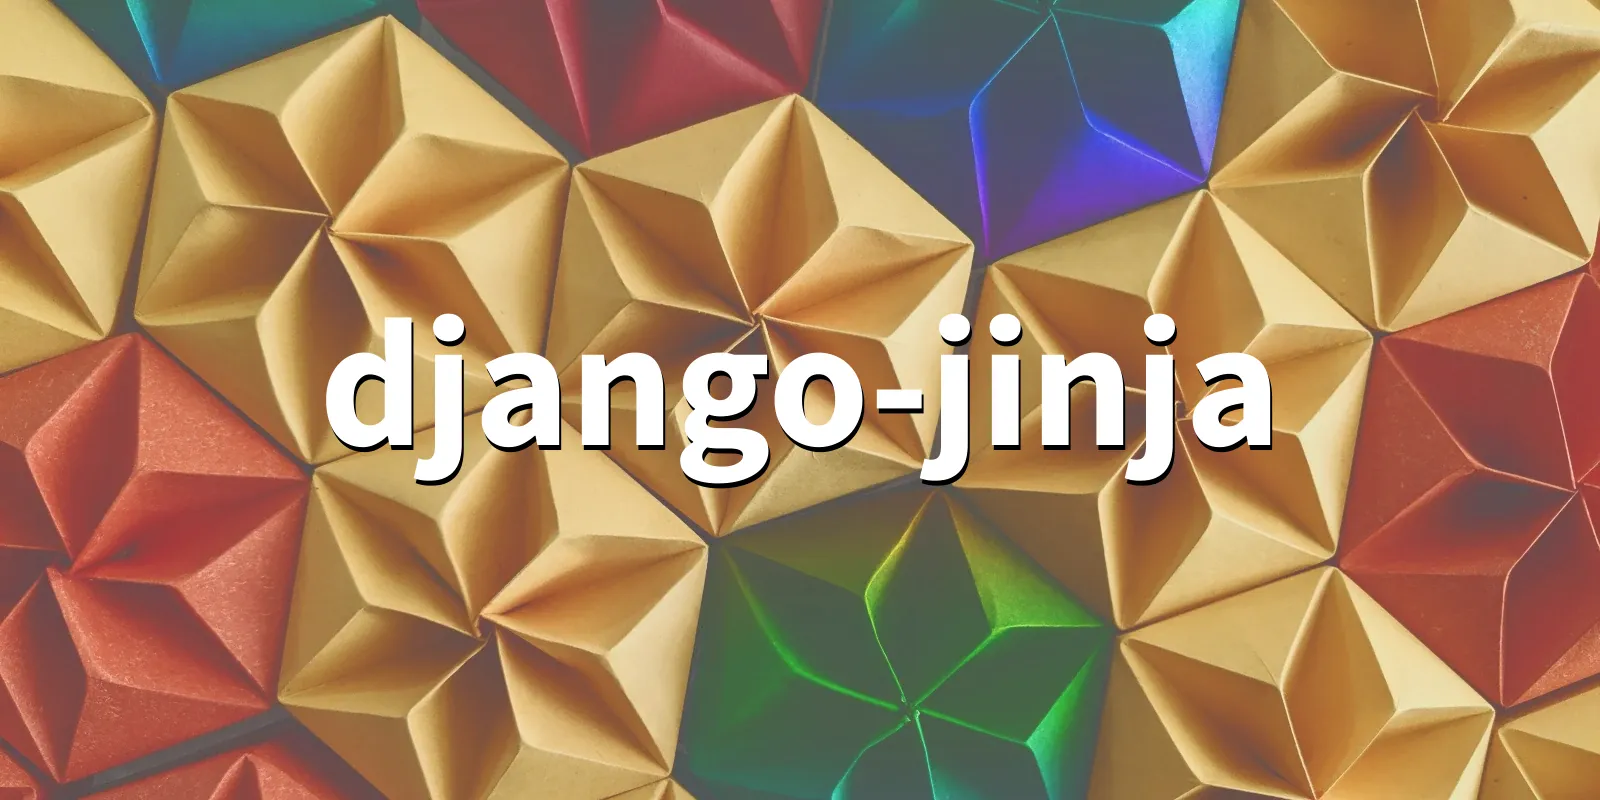 /pkg/d/django-jinja/django-jinja-banner.webp